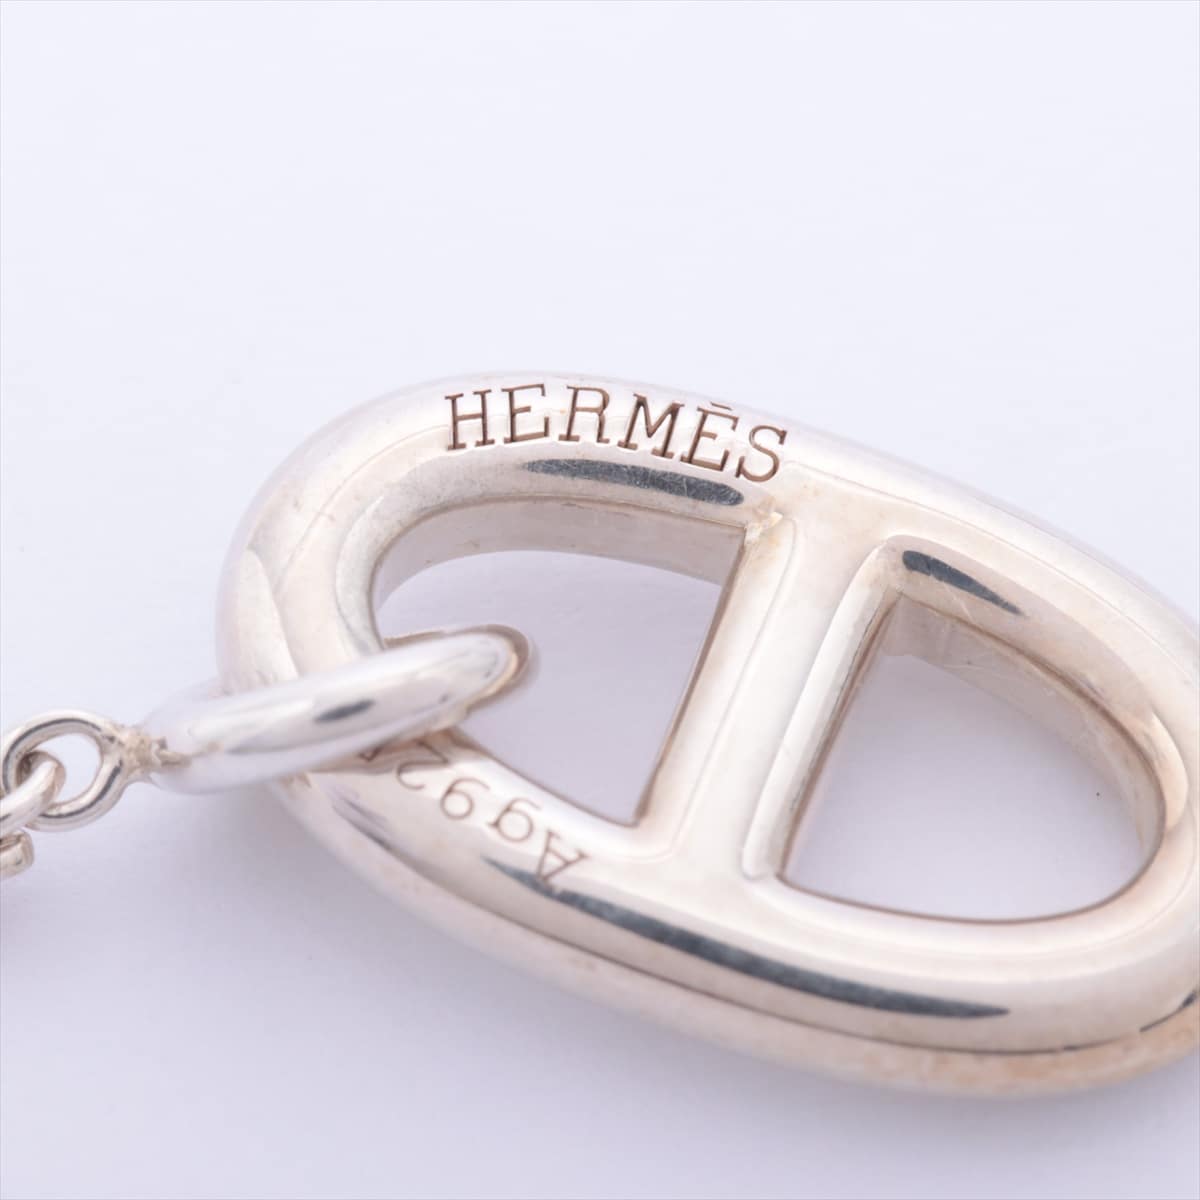 Hermès Chaîne d'Ancre Piercing jewelry (for both ears) 925 6.8g Silver